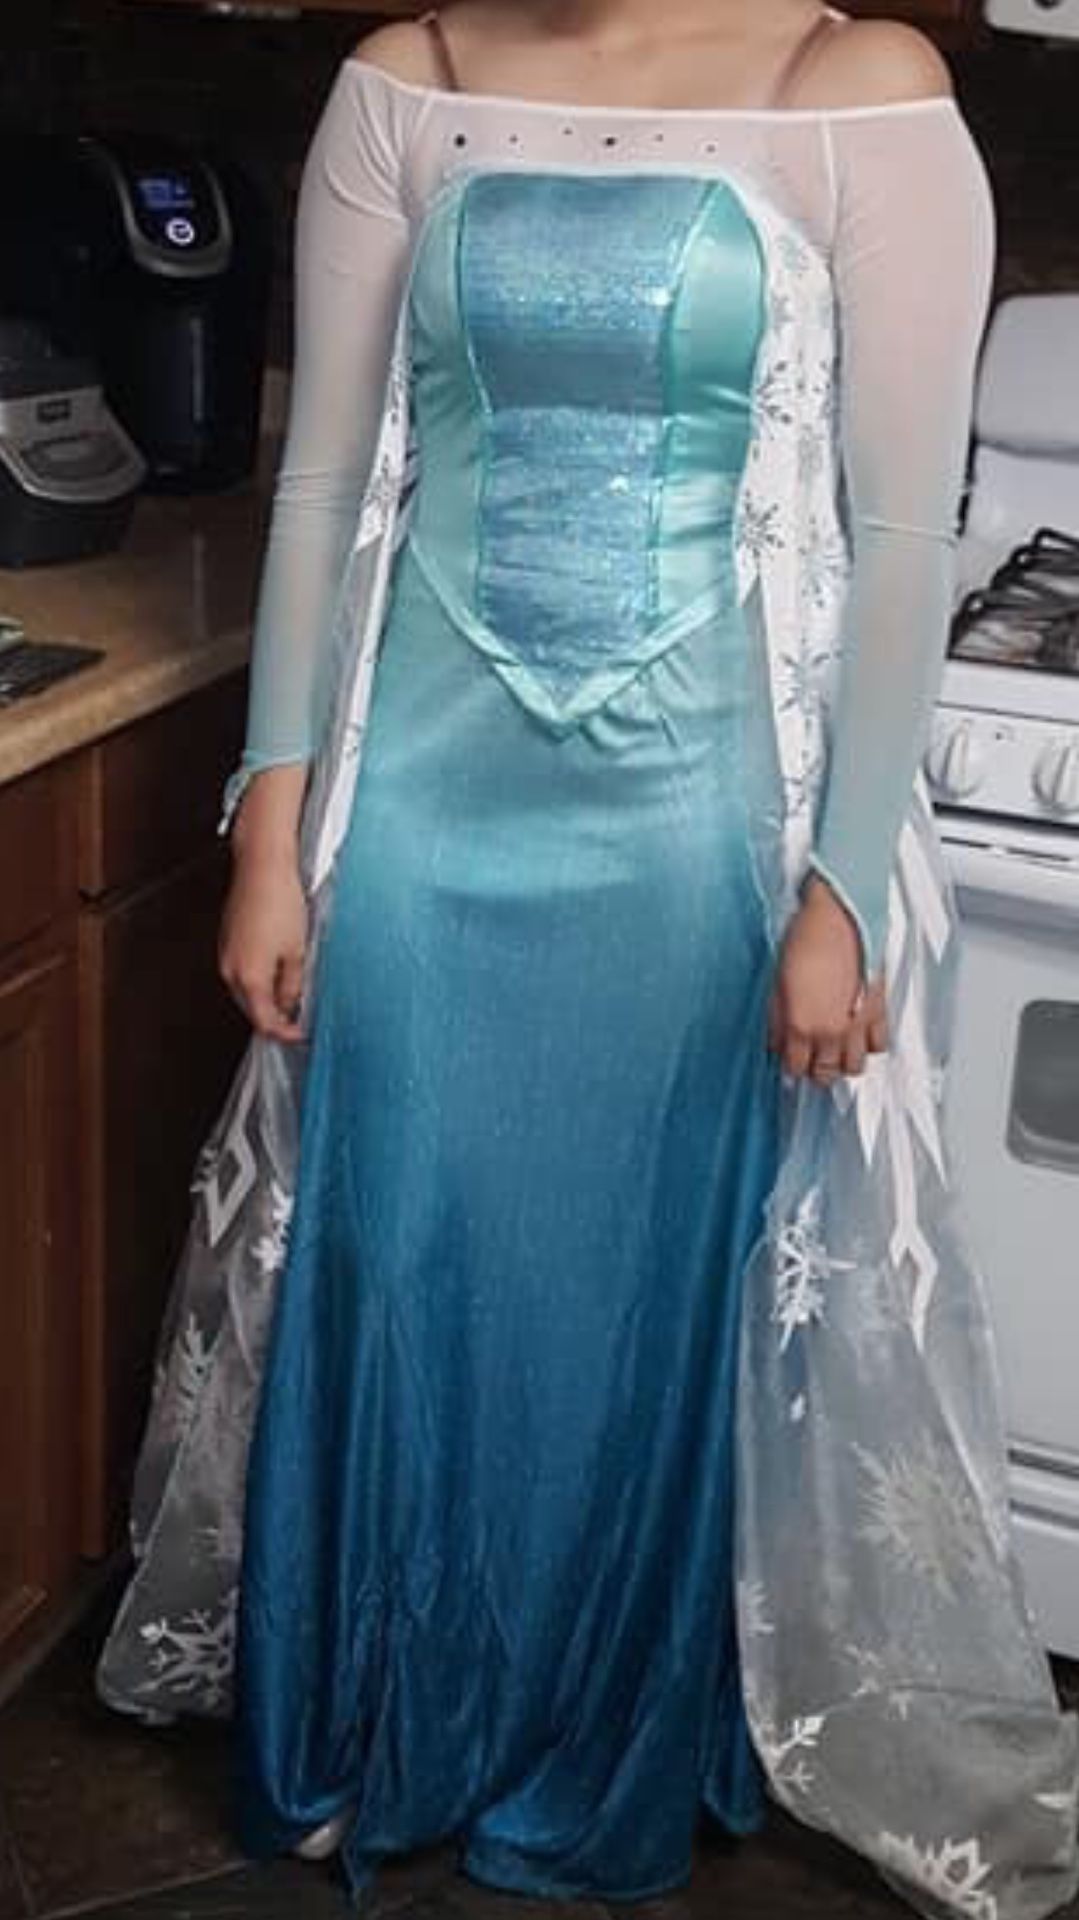 Frozen Elsa dress adult size